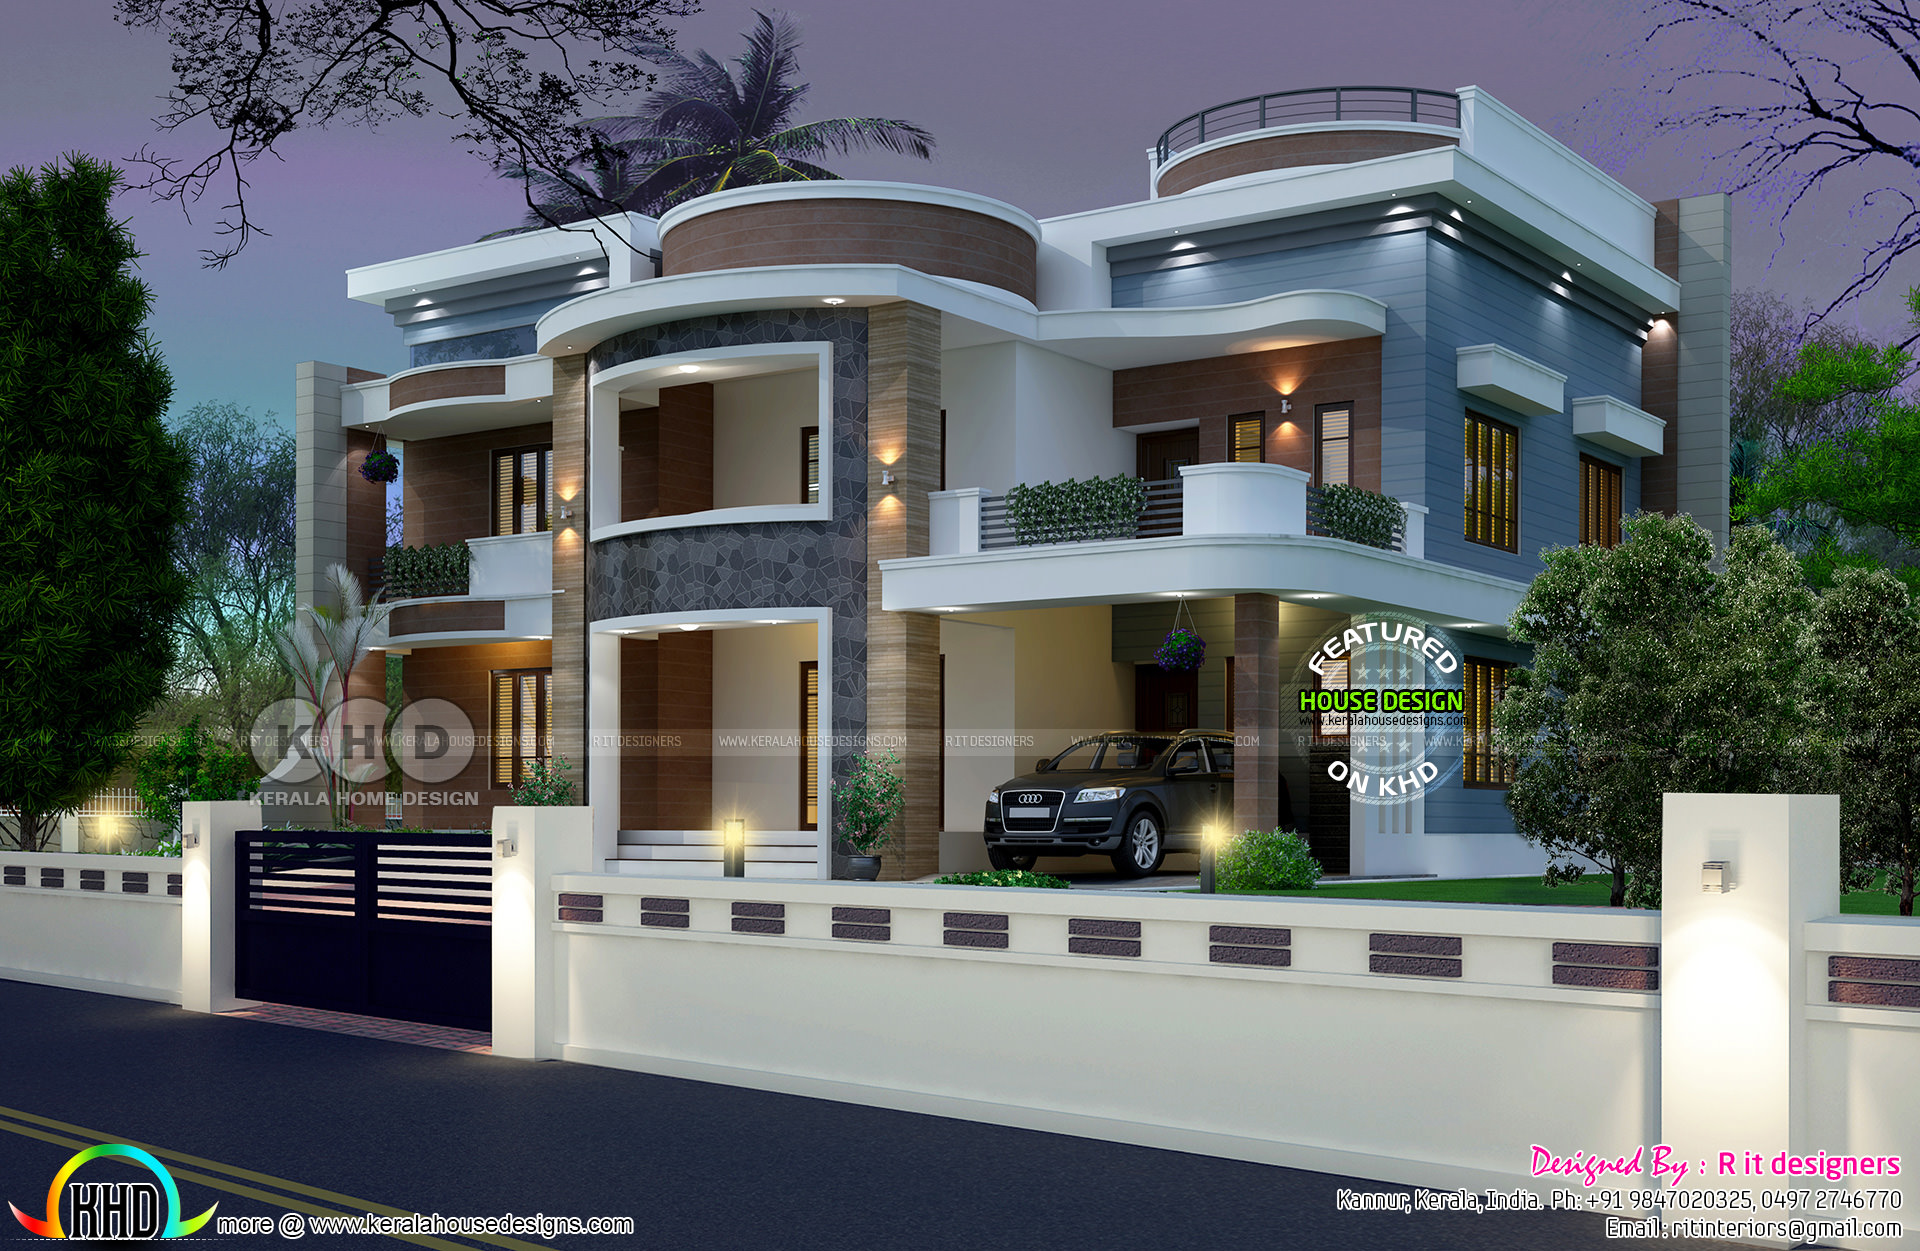 Astounding 6  bedroom  house  plan  Kerala home  design  and 